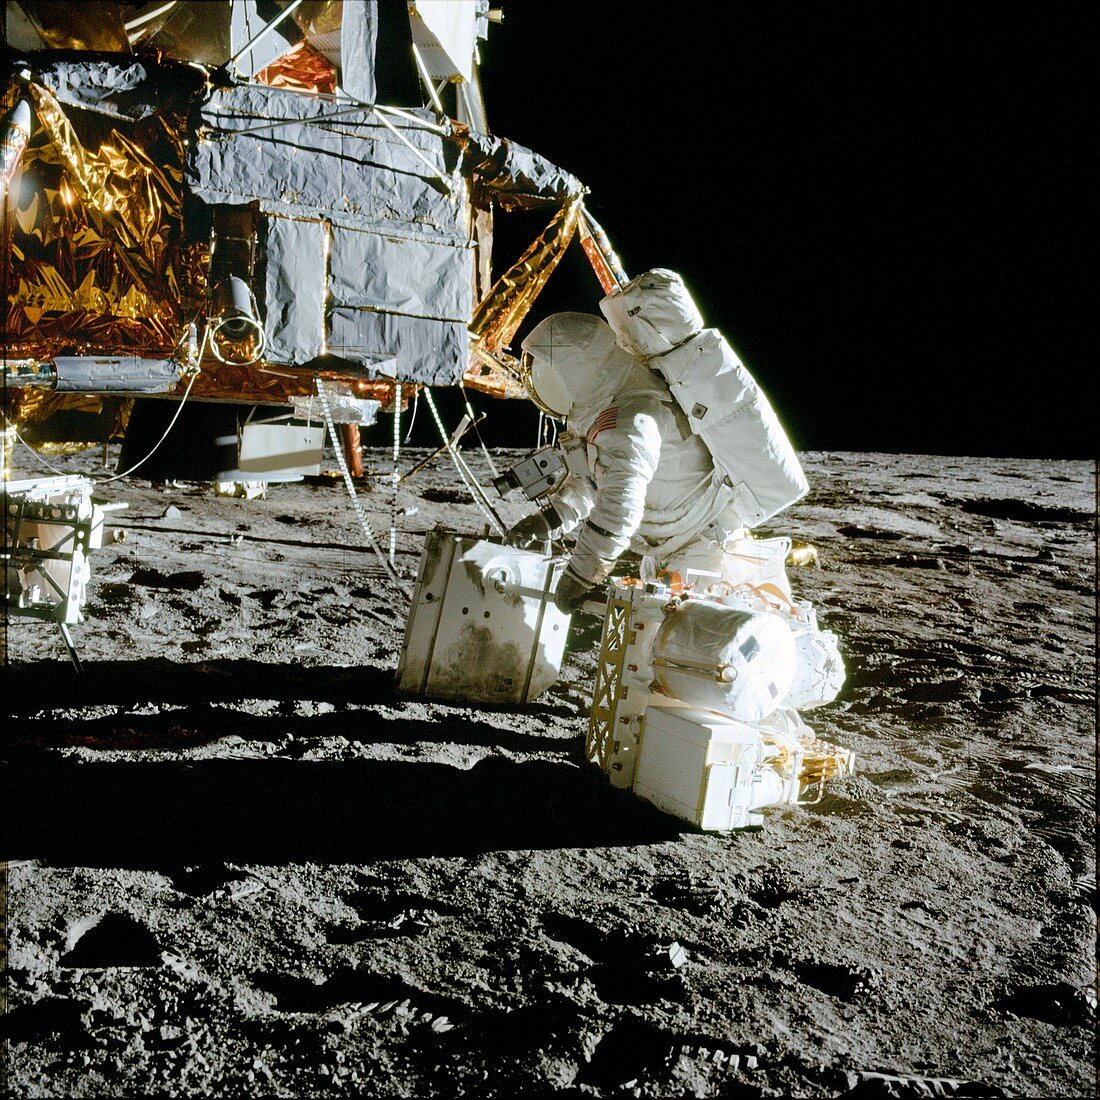 Apollo 12 astronaut in front of Lunar Module